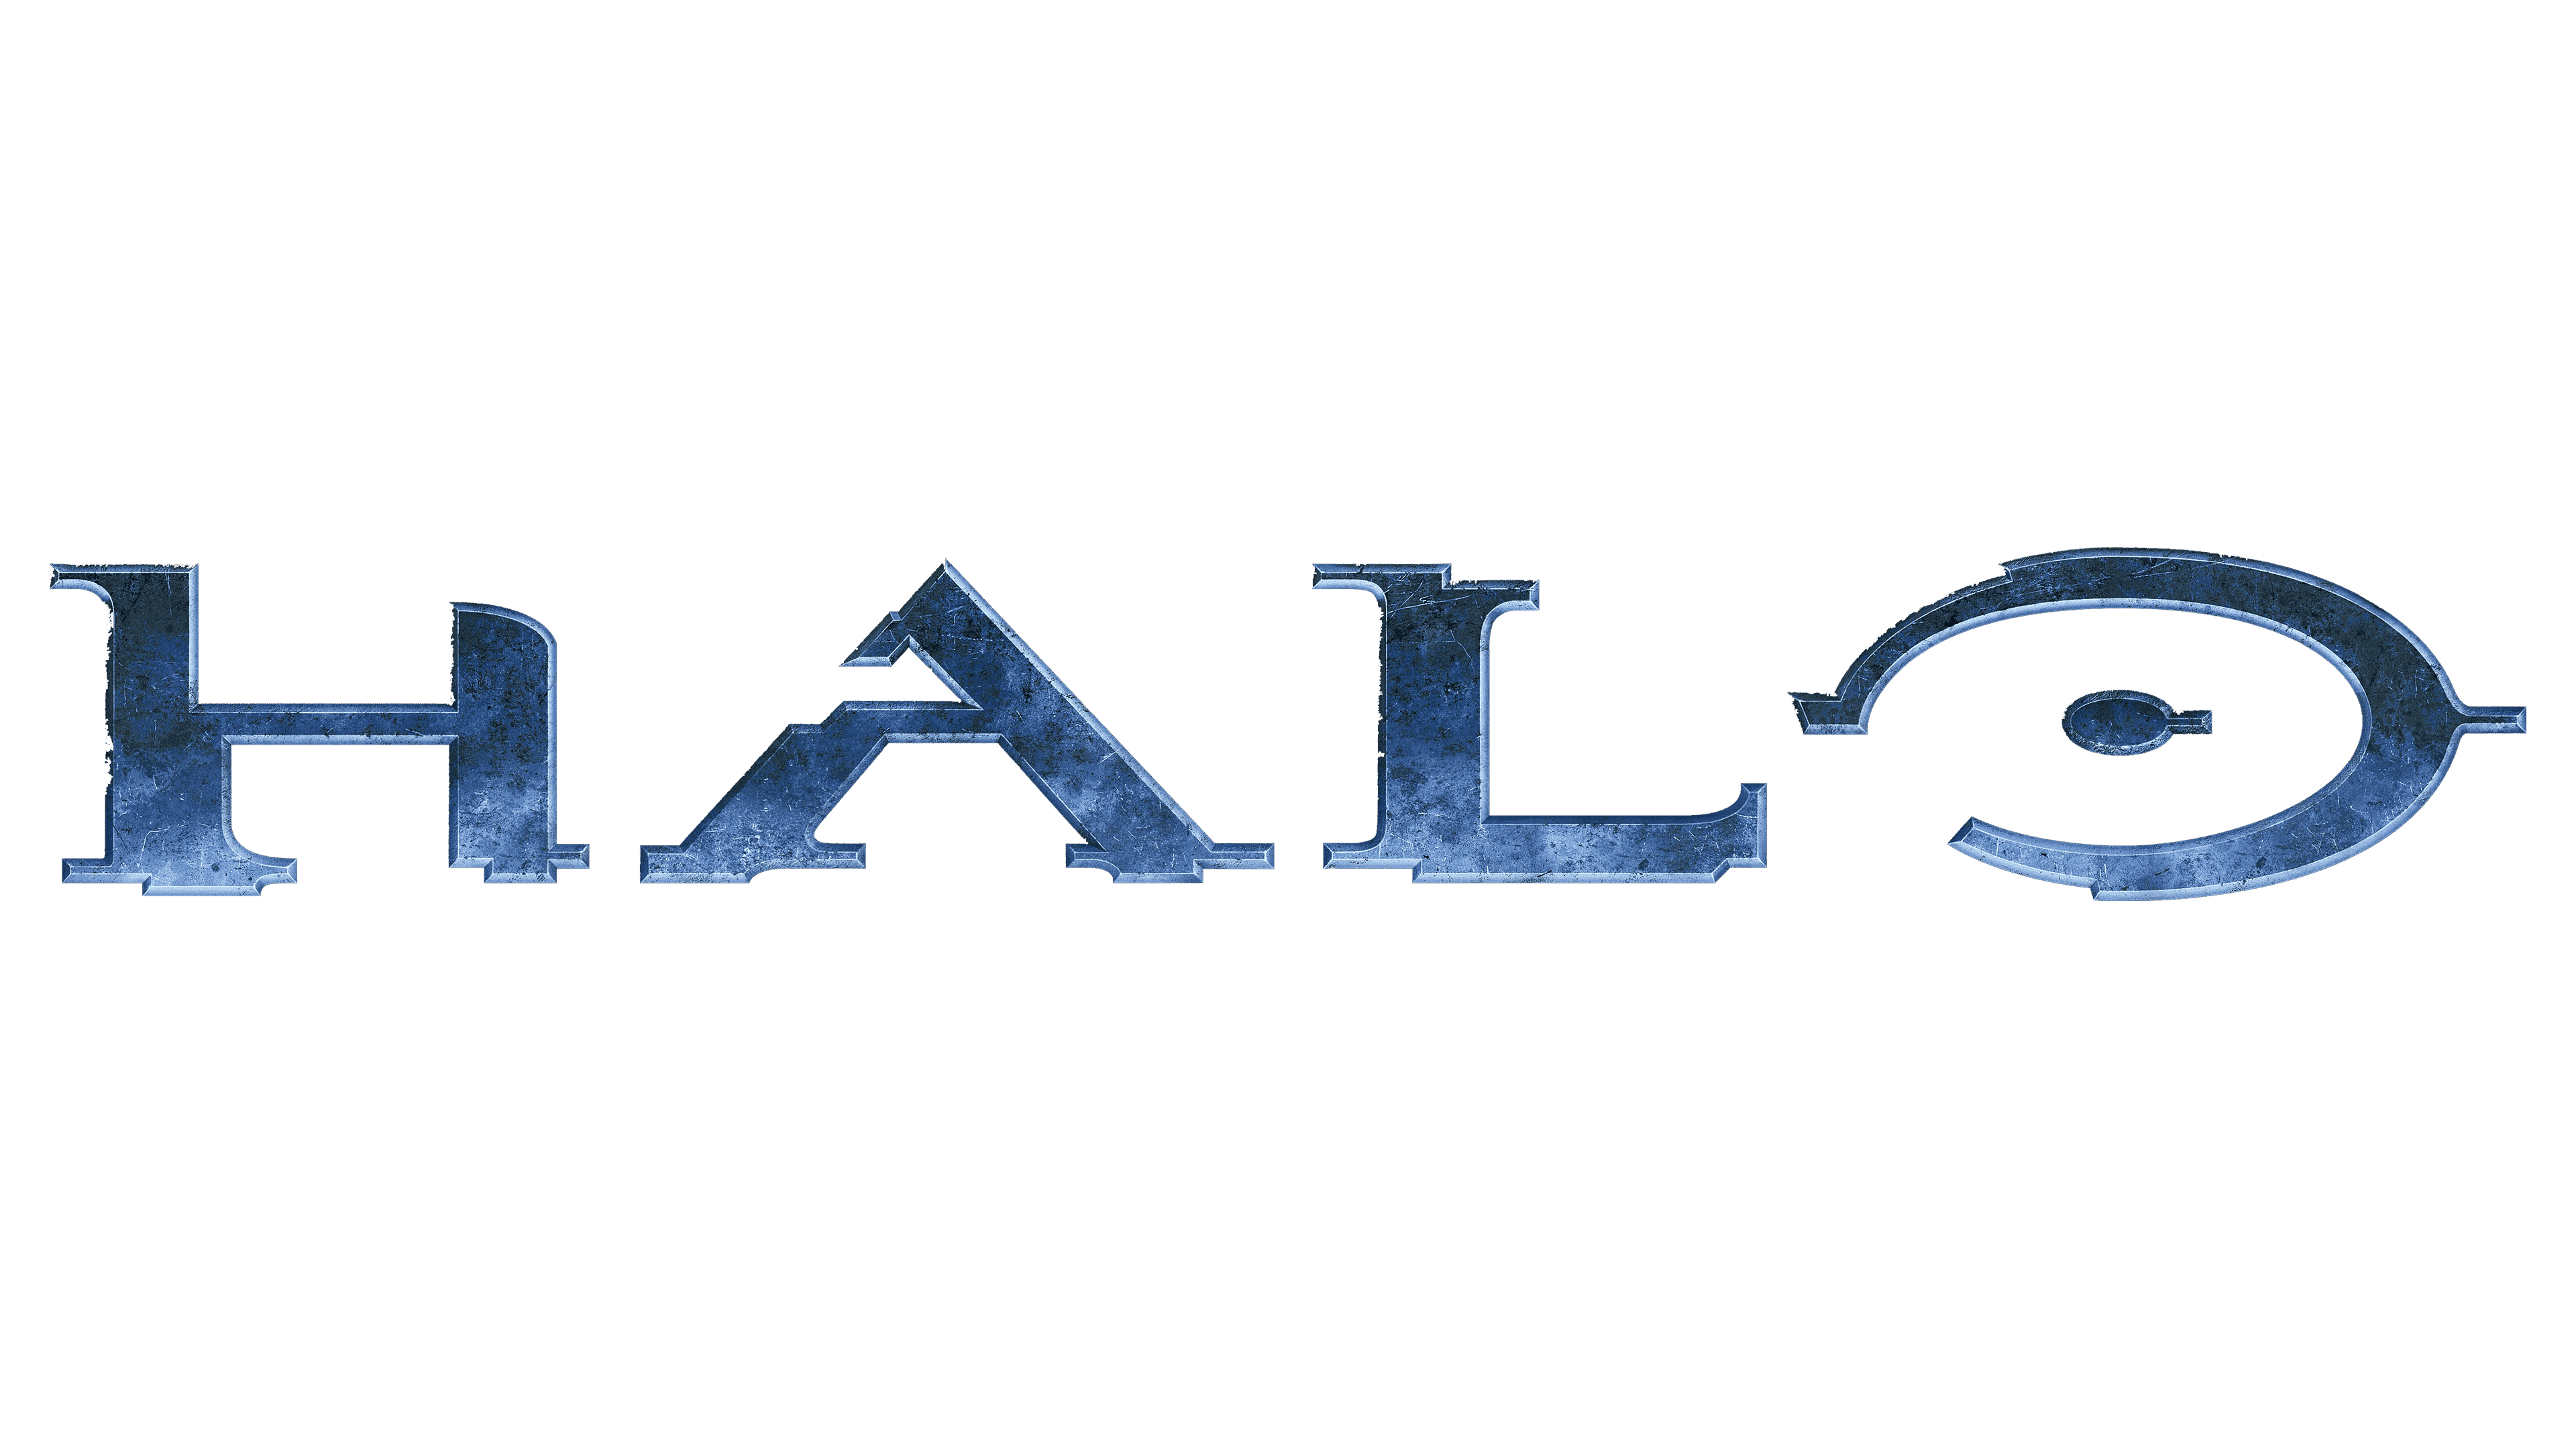 Halo 2 Logo PNG Image